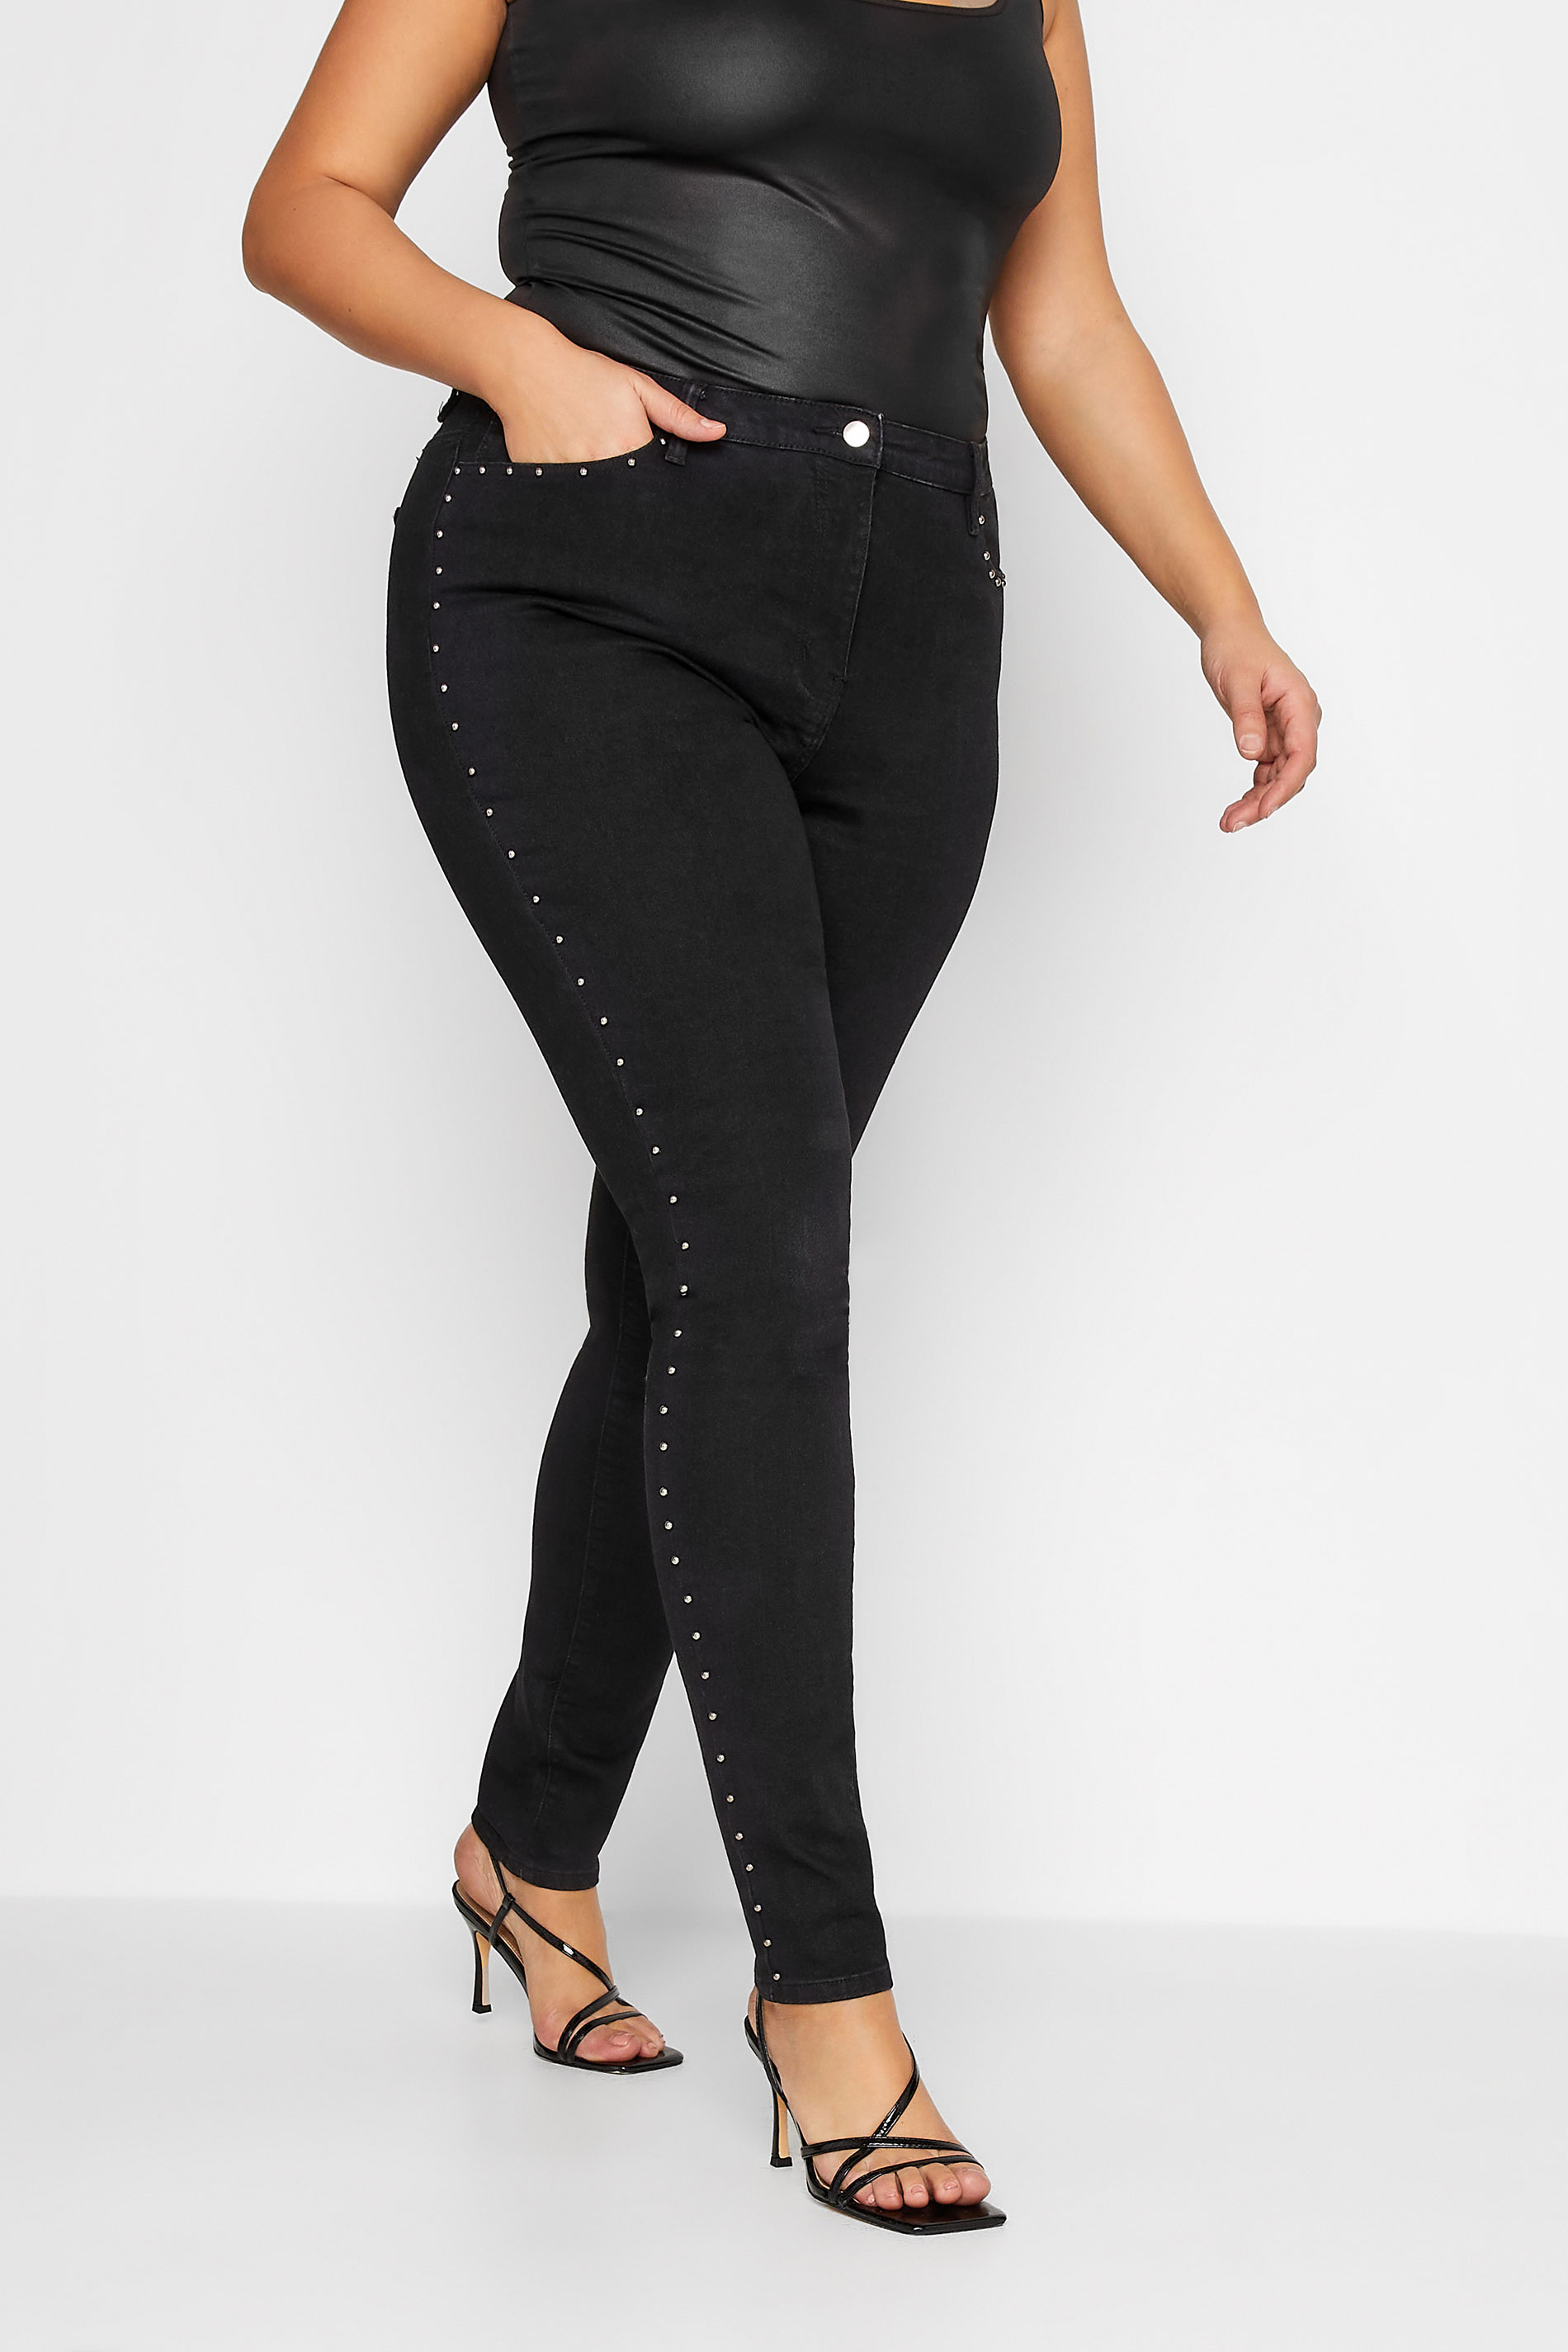 LTS Tall Women's Black Studded AVA Skinny Jeans | Long Tall Sally 1